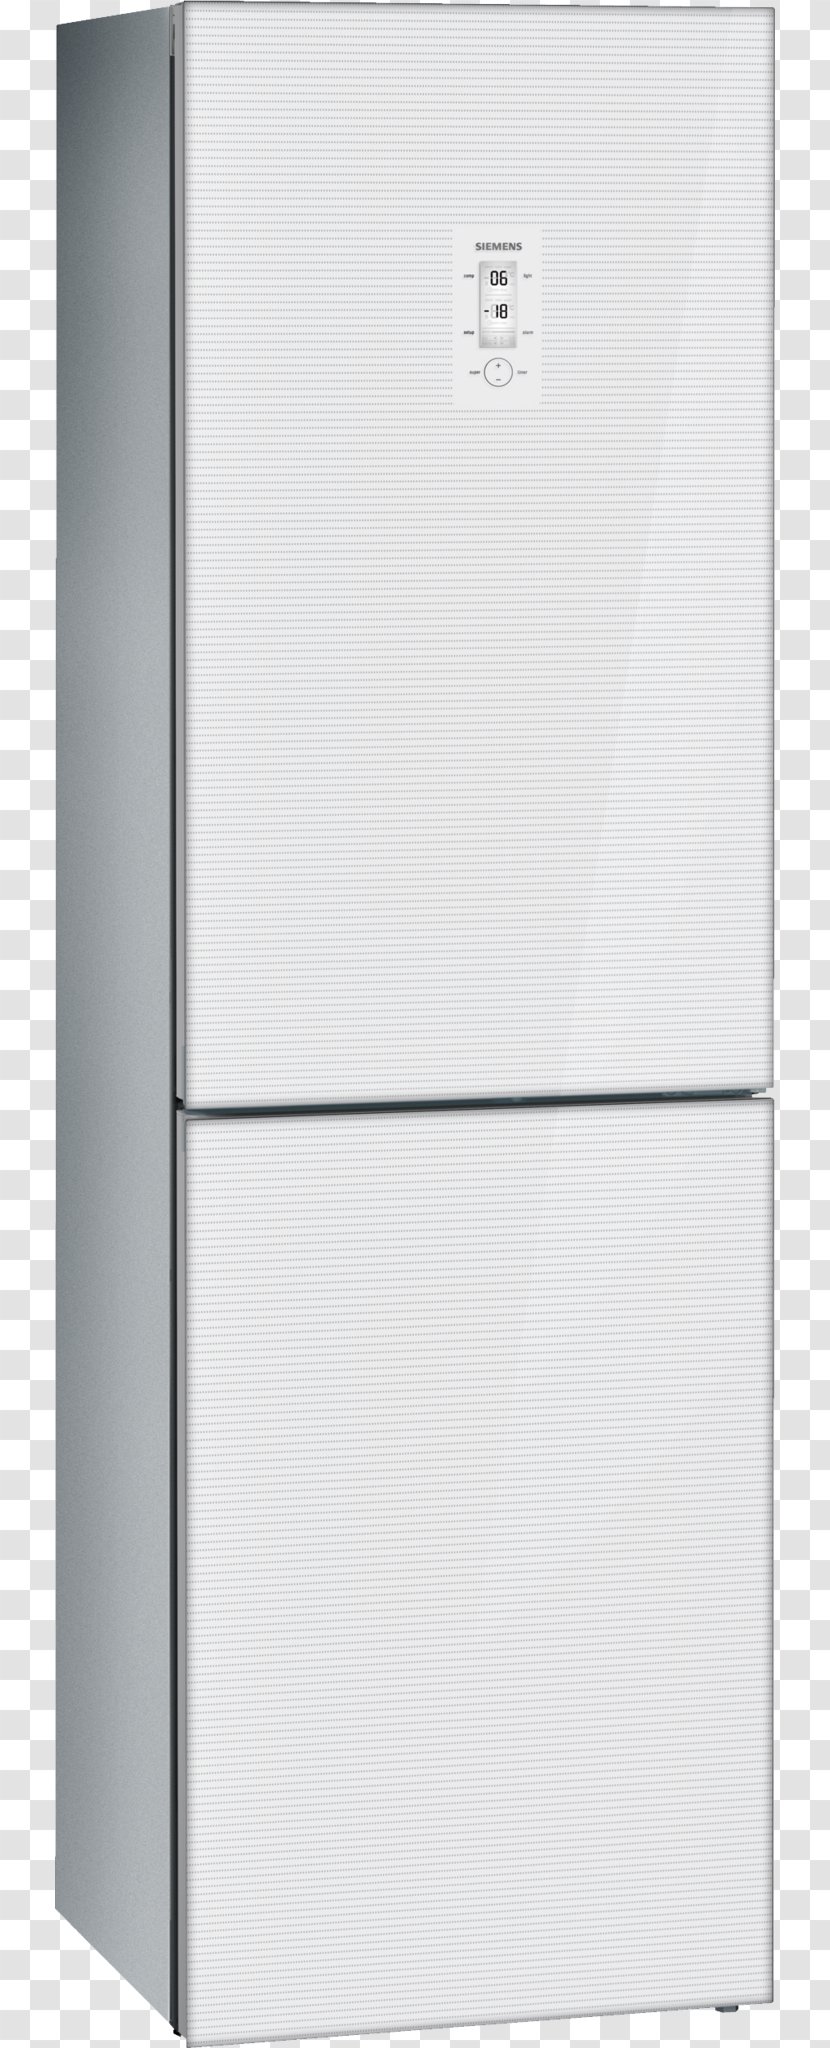 Minsk Refrigerator Beko Hire Purchase Online Shopping Transparent PNG